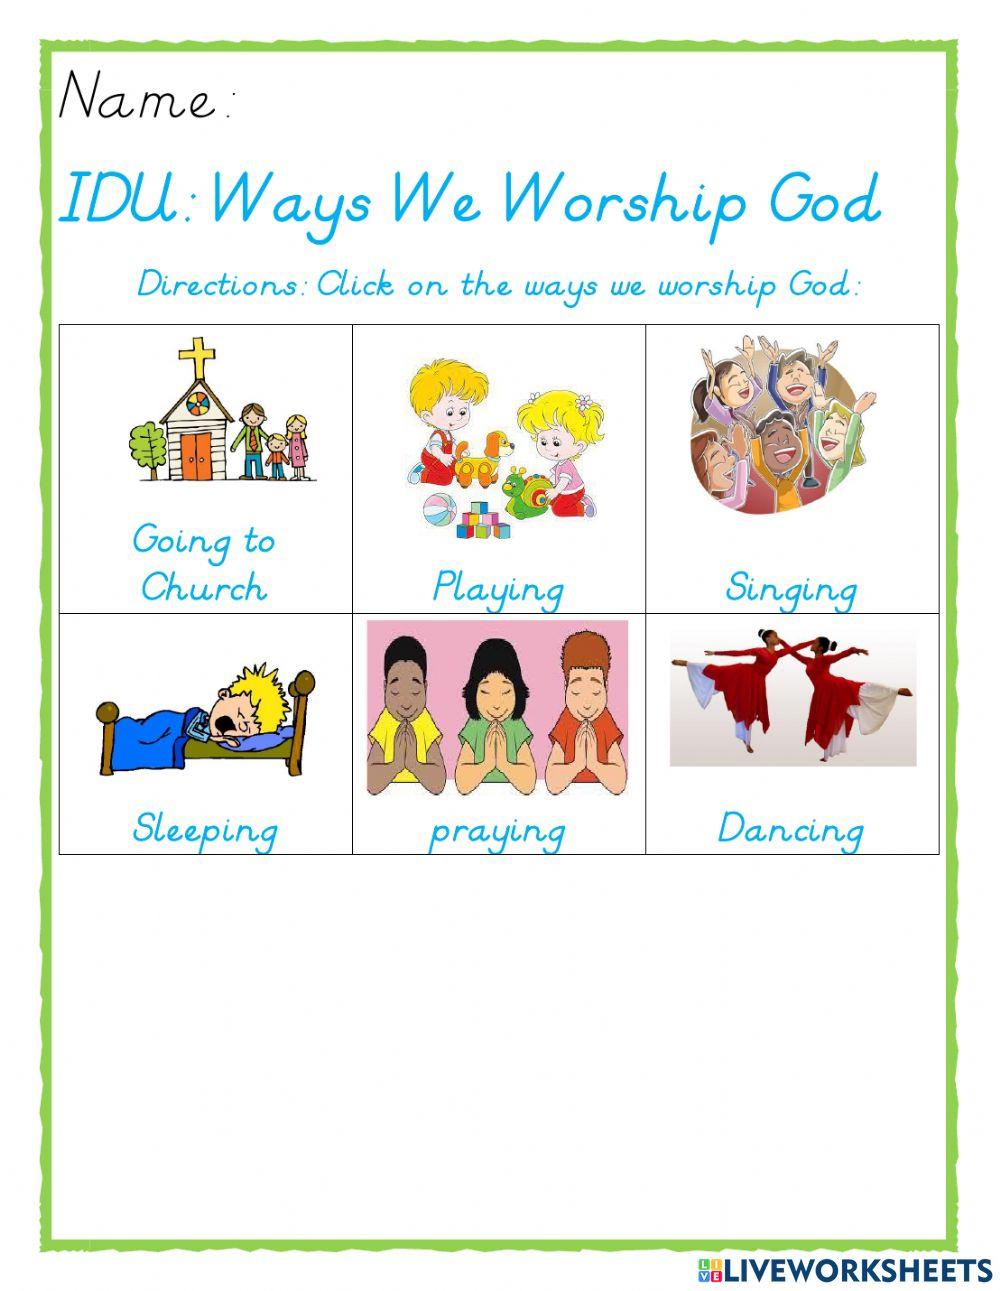 IDU Ways to Worship God